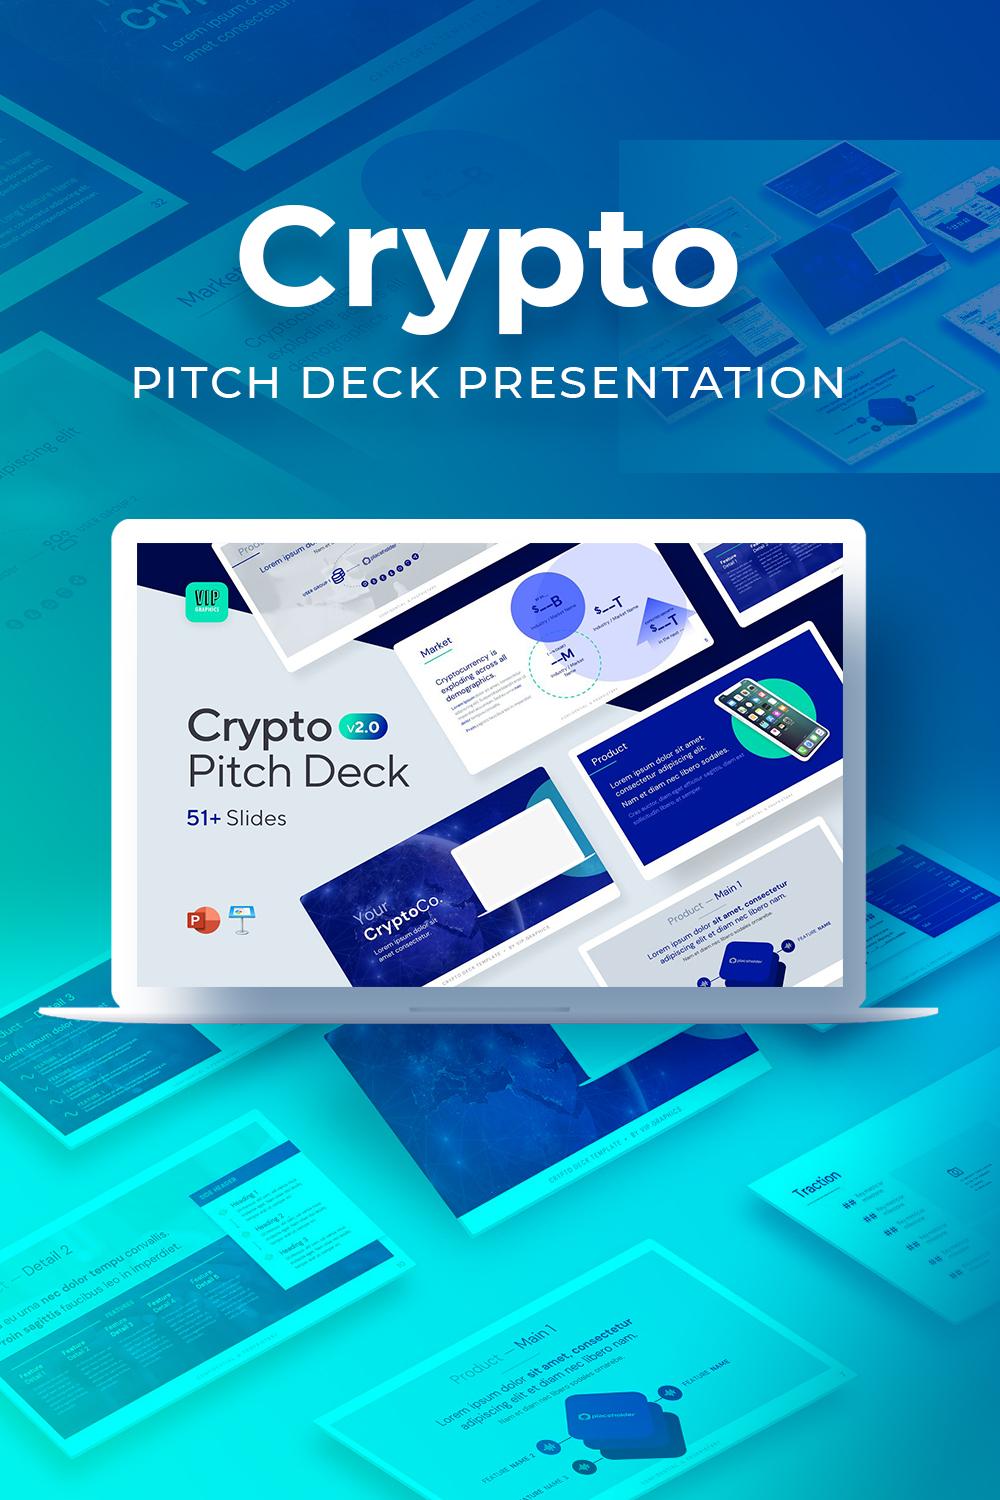 Crypto Pitch Deck Presentation by MasterBundles Pinterest Collage Image.